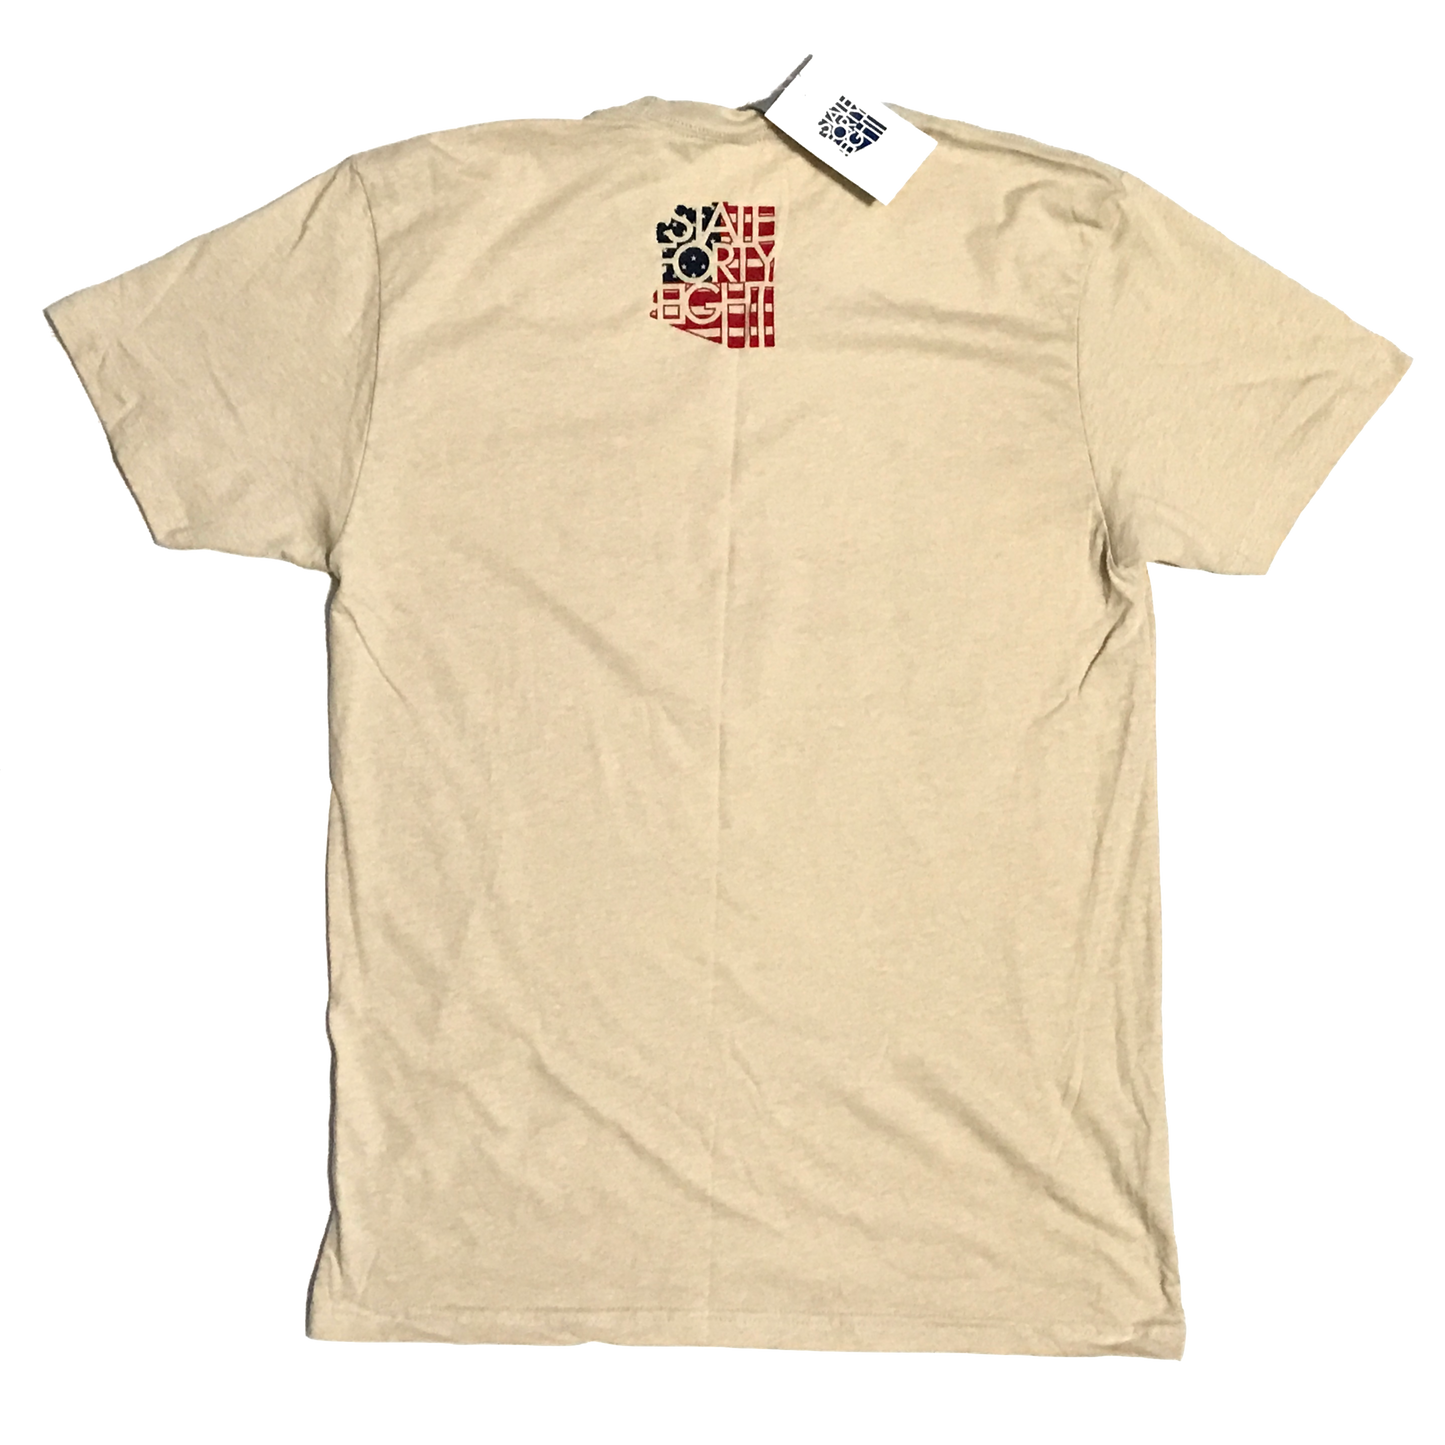 Arizona Diamondbacks State Forty Eight USA Shirt - M